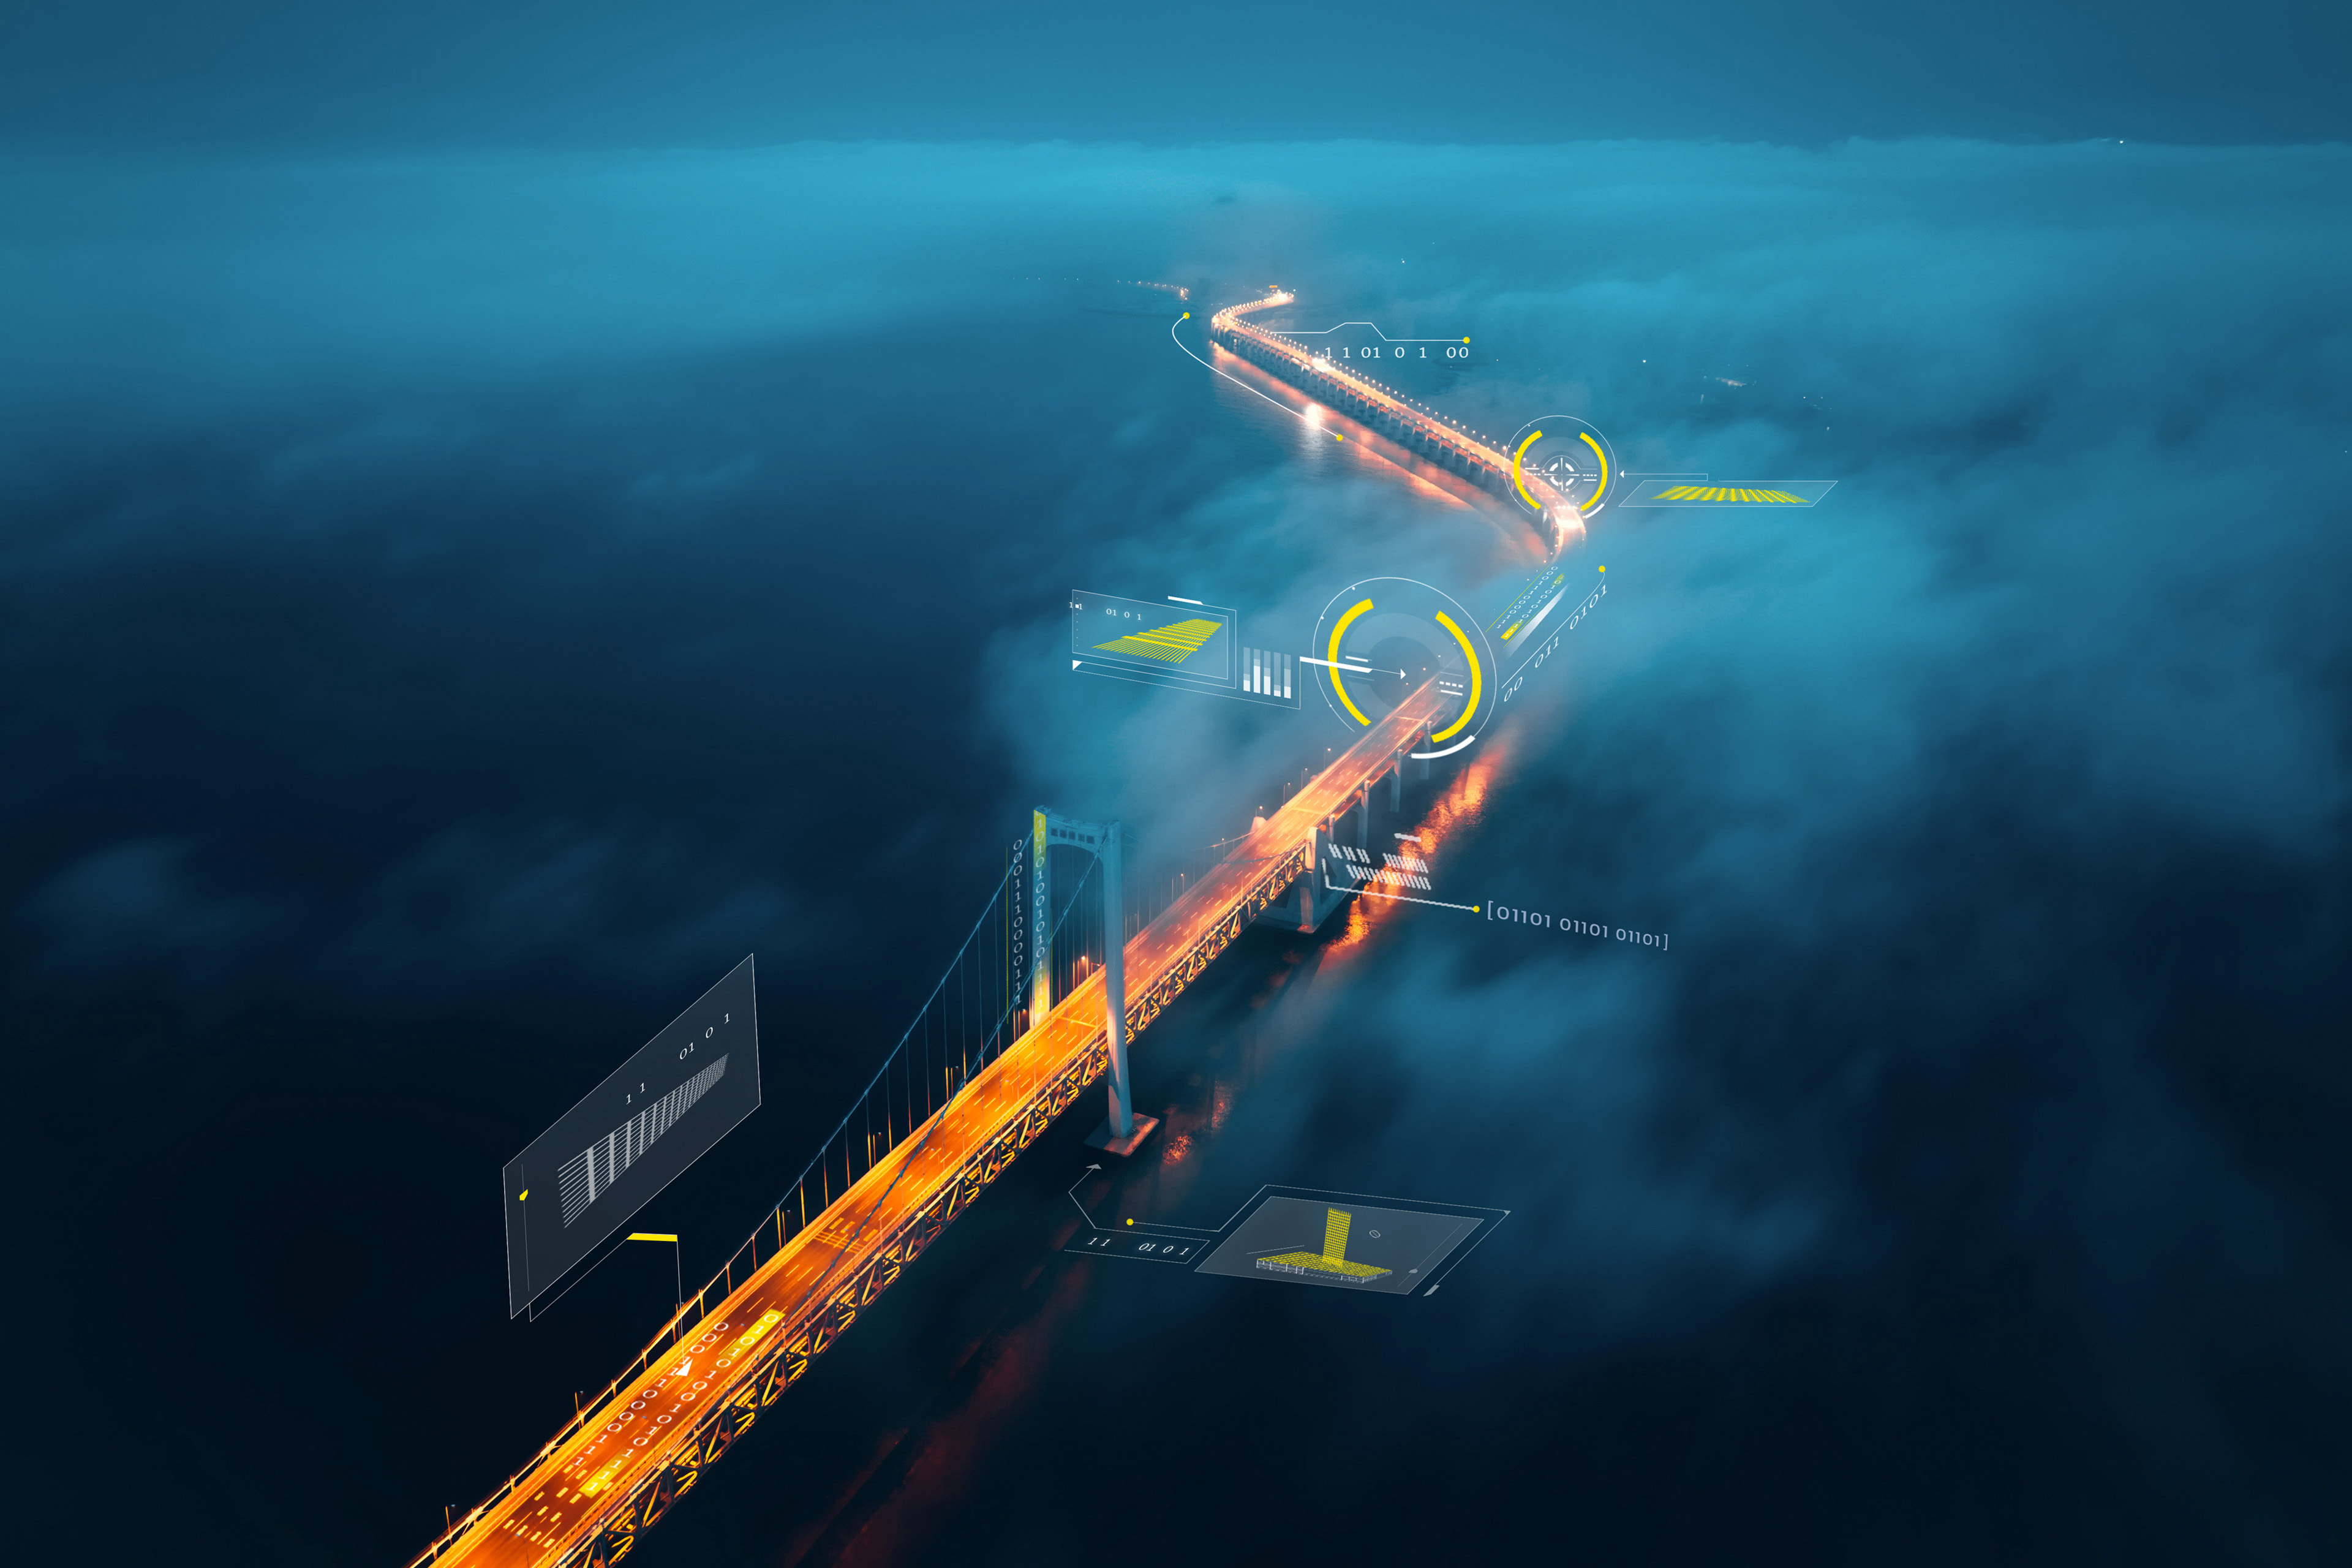 AI a cross sea bridge in the fog at night